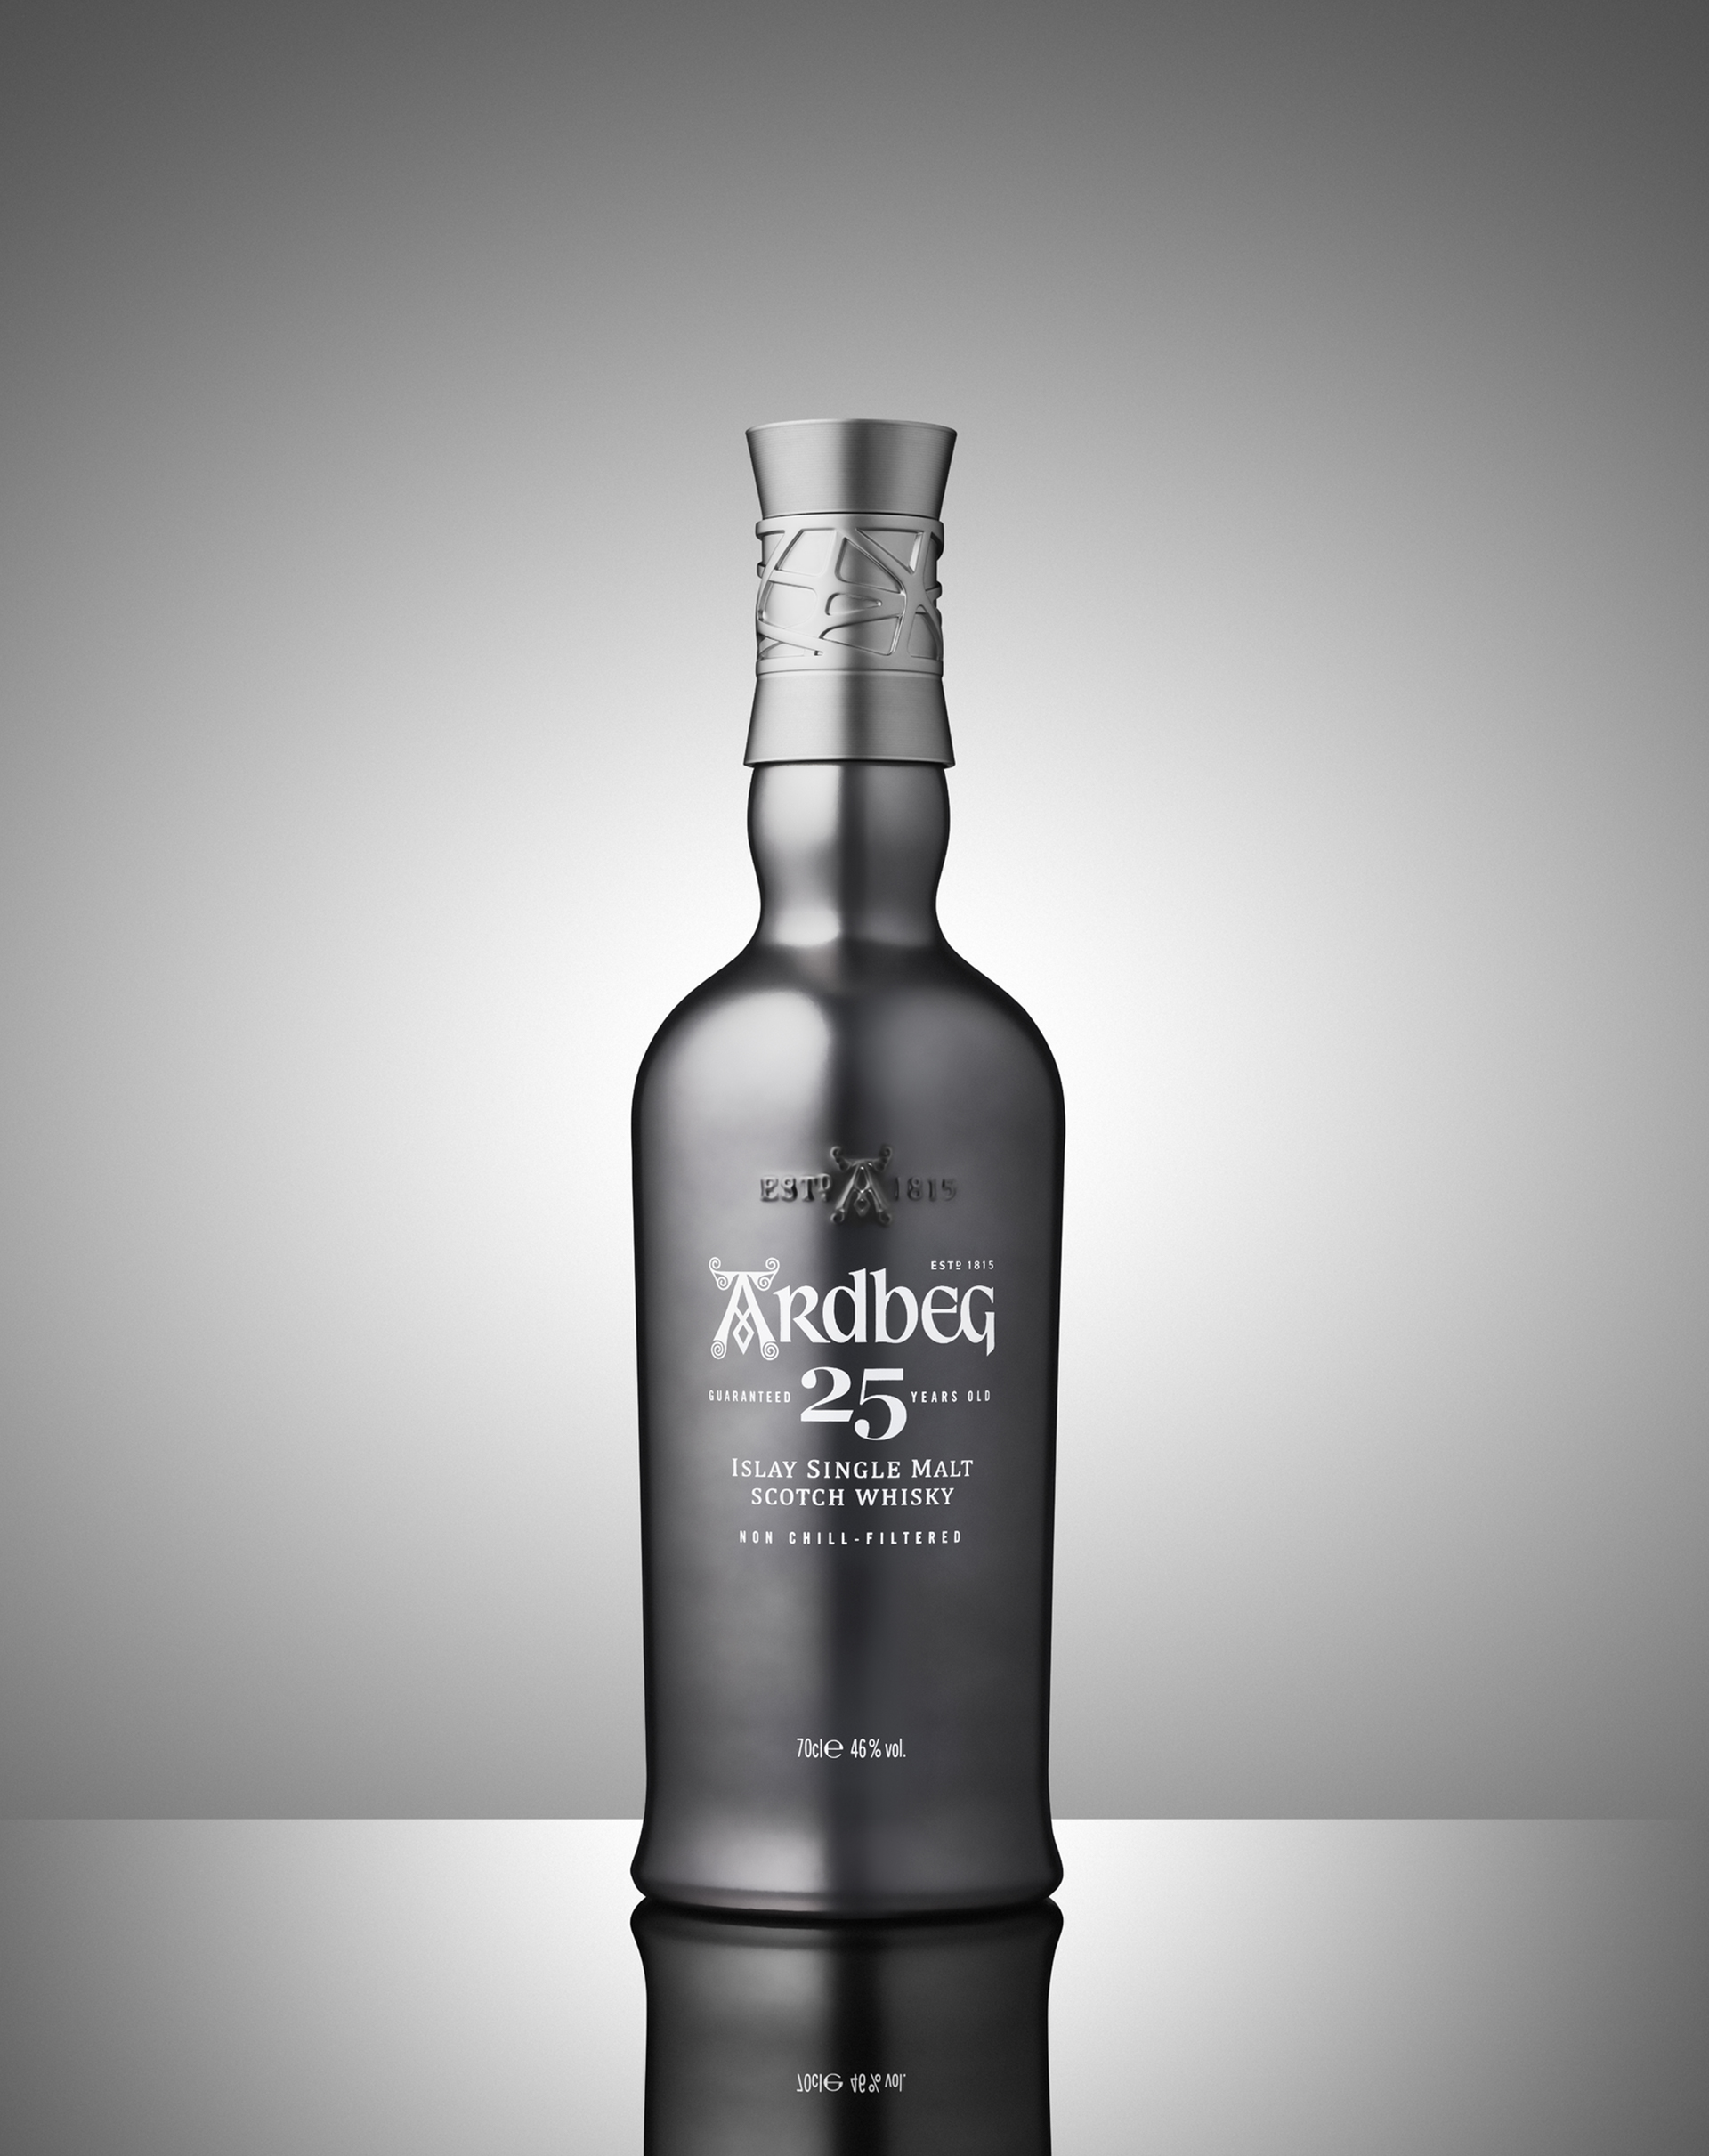 Ardbeg 25 Years Old Islay Single Malt Scotch Whisky 46% 0,7l